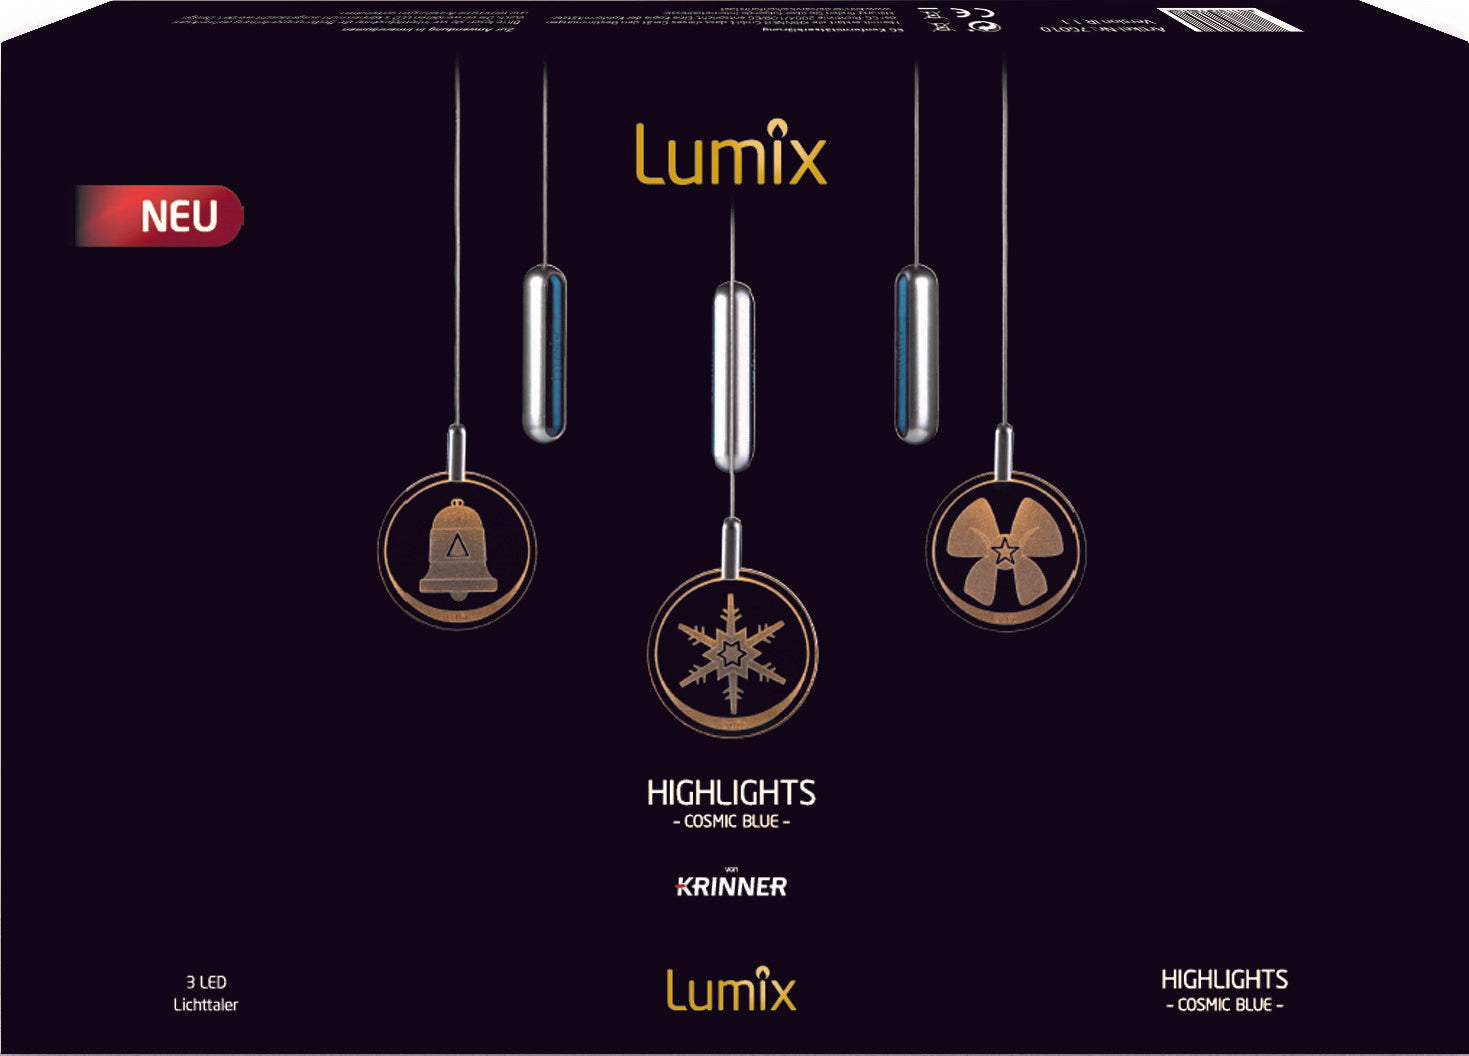 Lumix Highlights Cosmic Blue